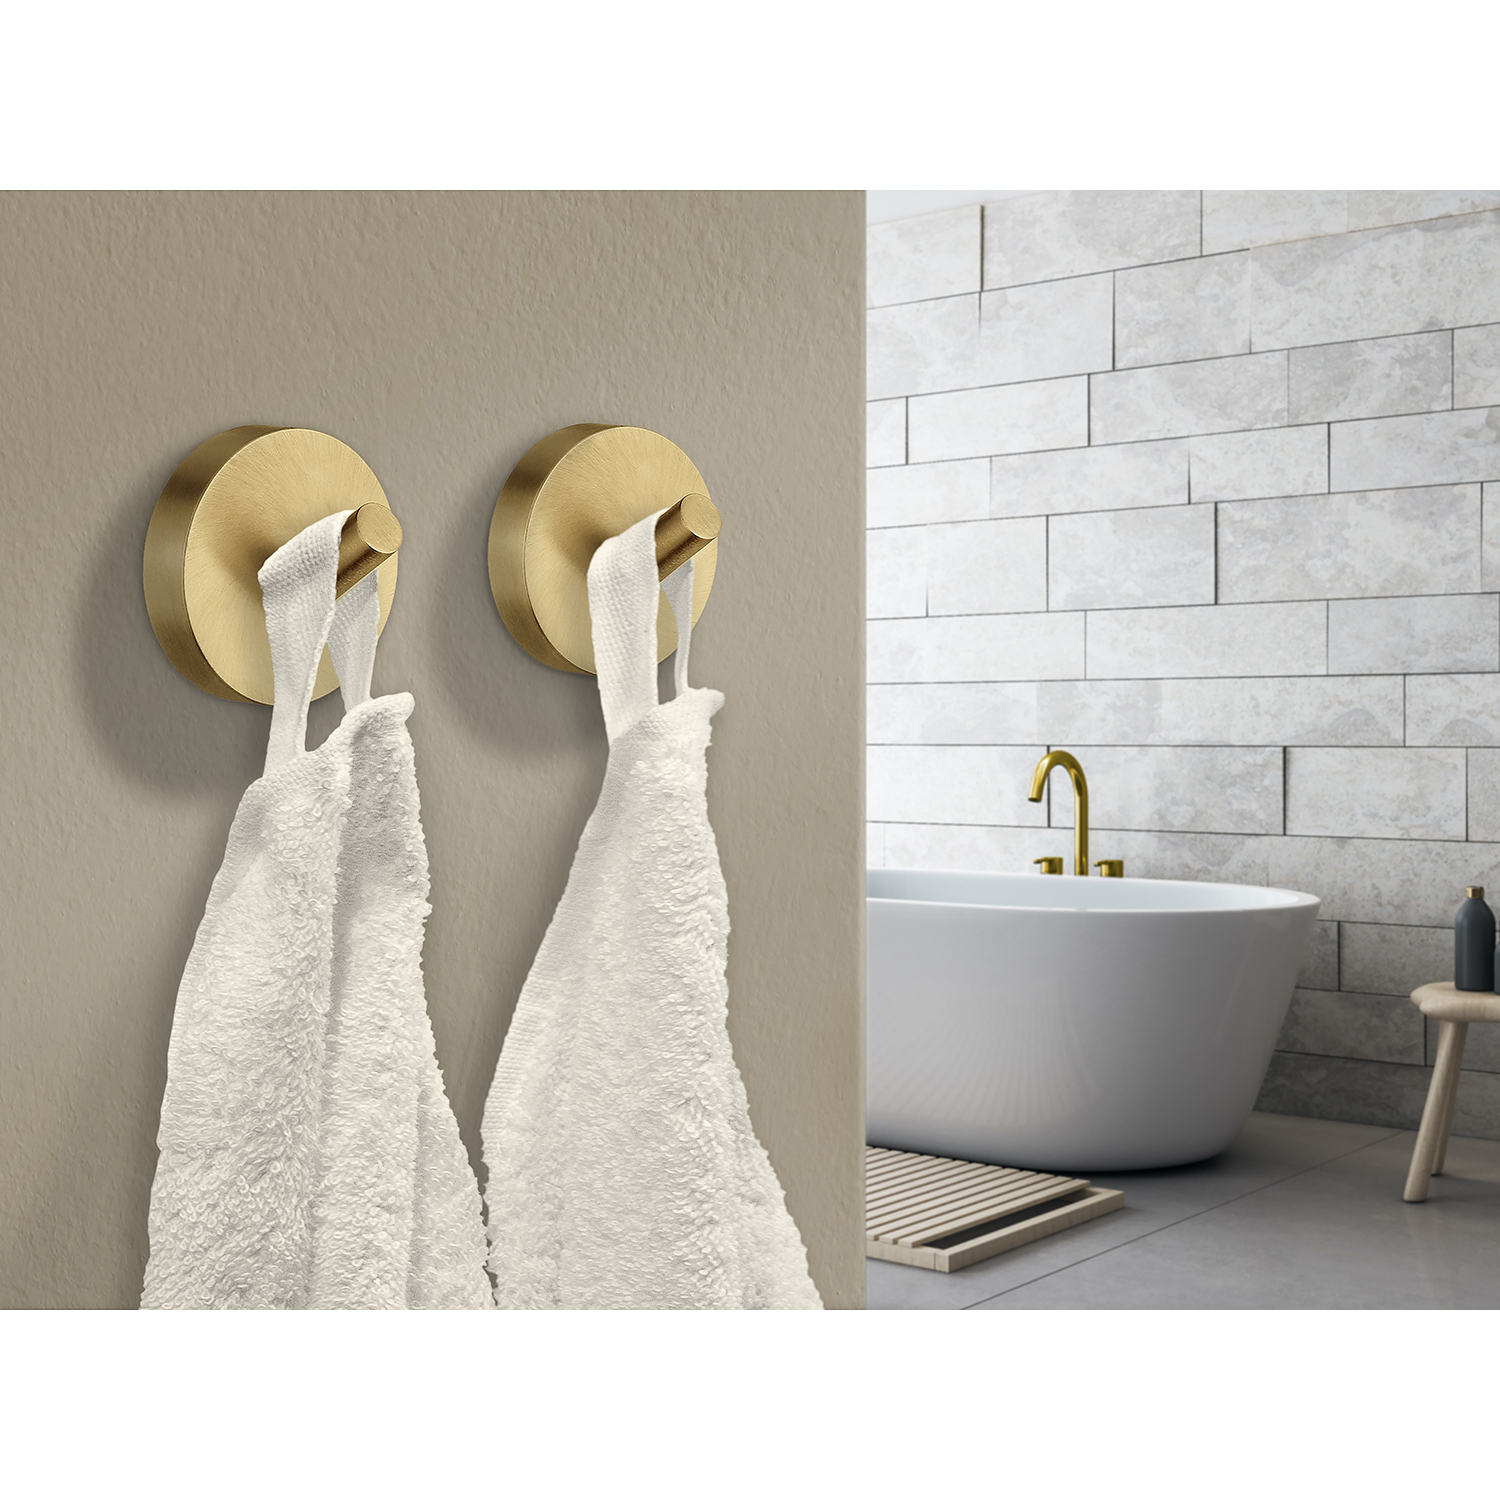 Smedbo Home Series Accesorios de baño Portavasos de latón cepillado para cepillos de dientes